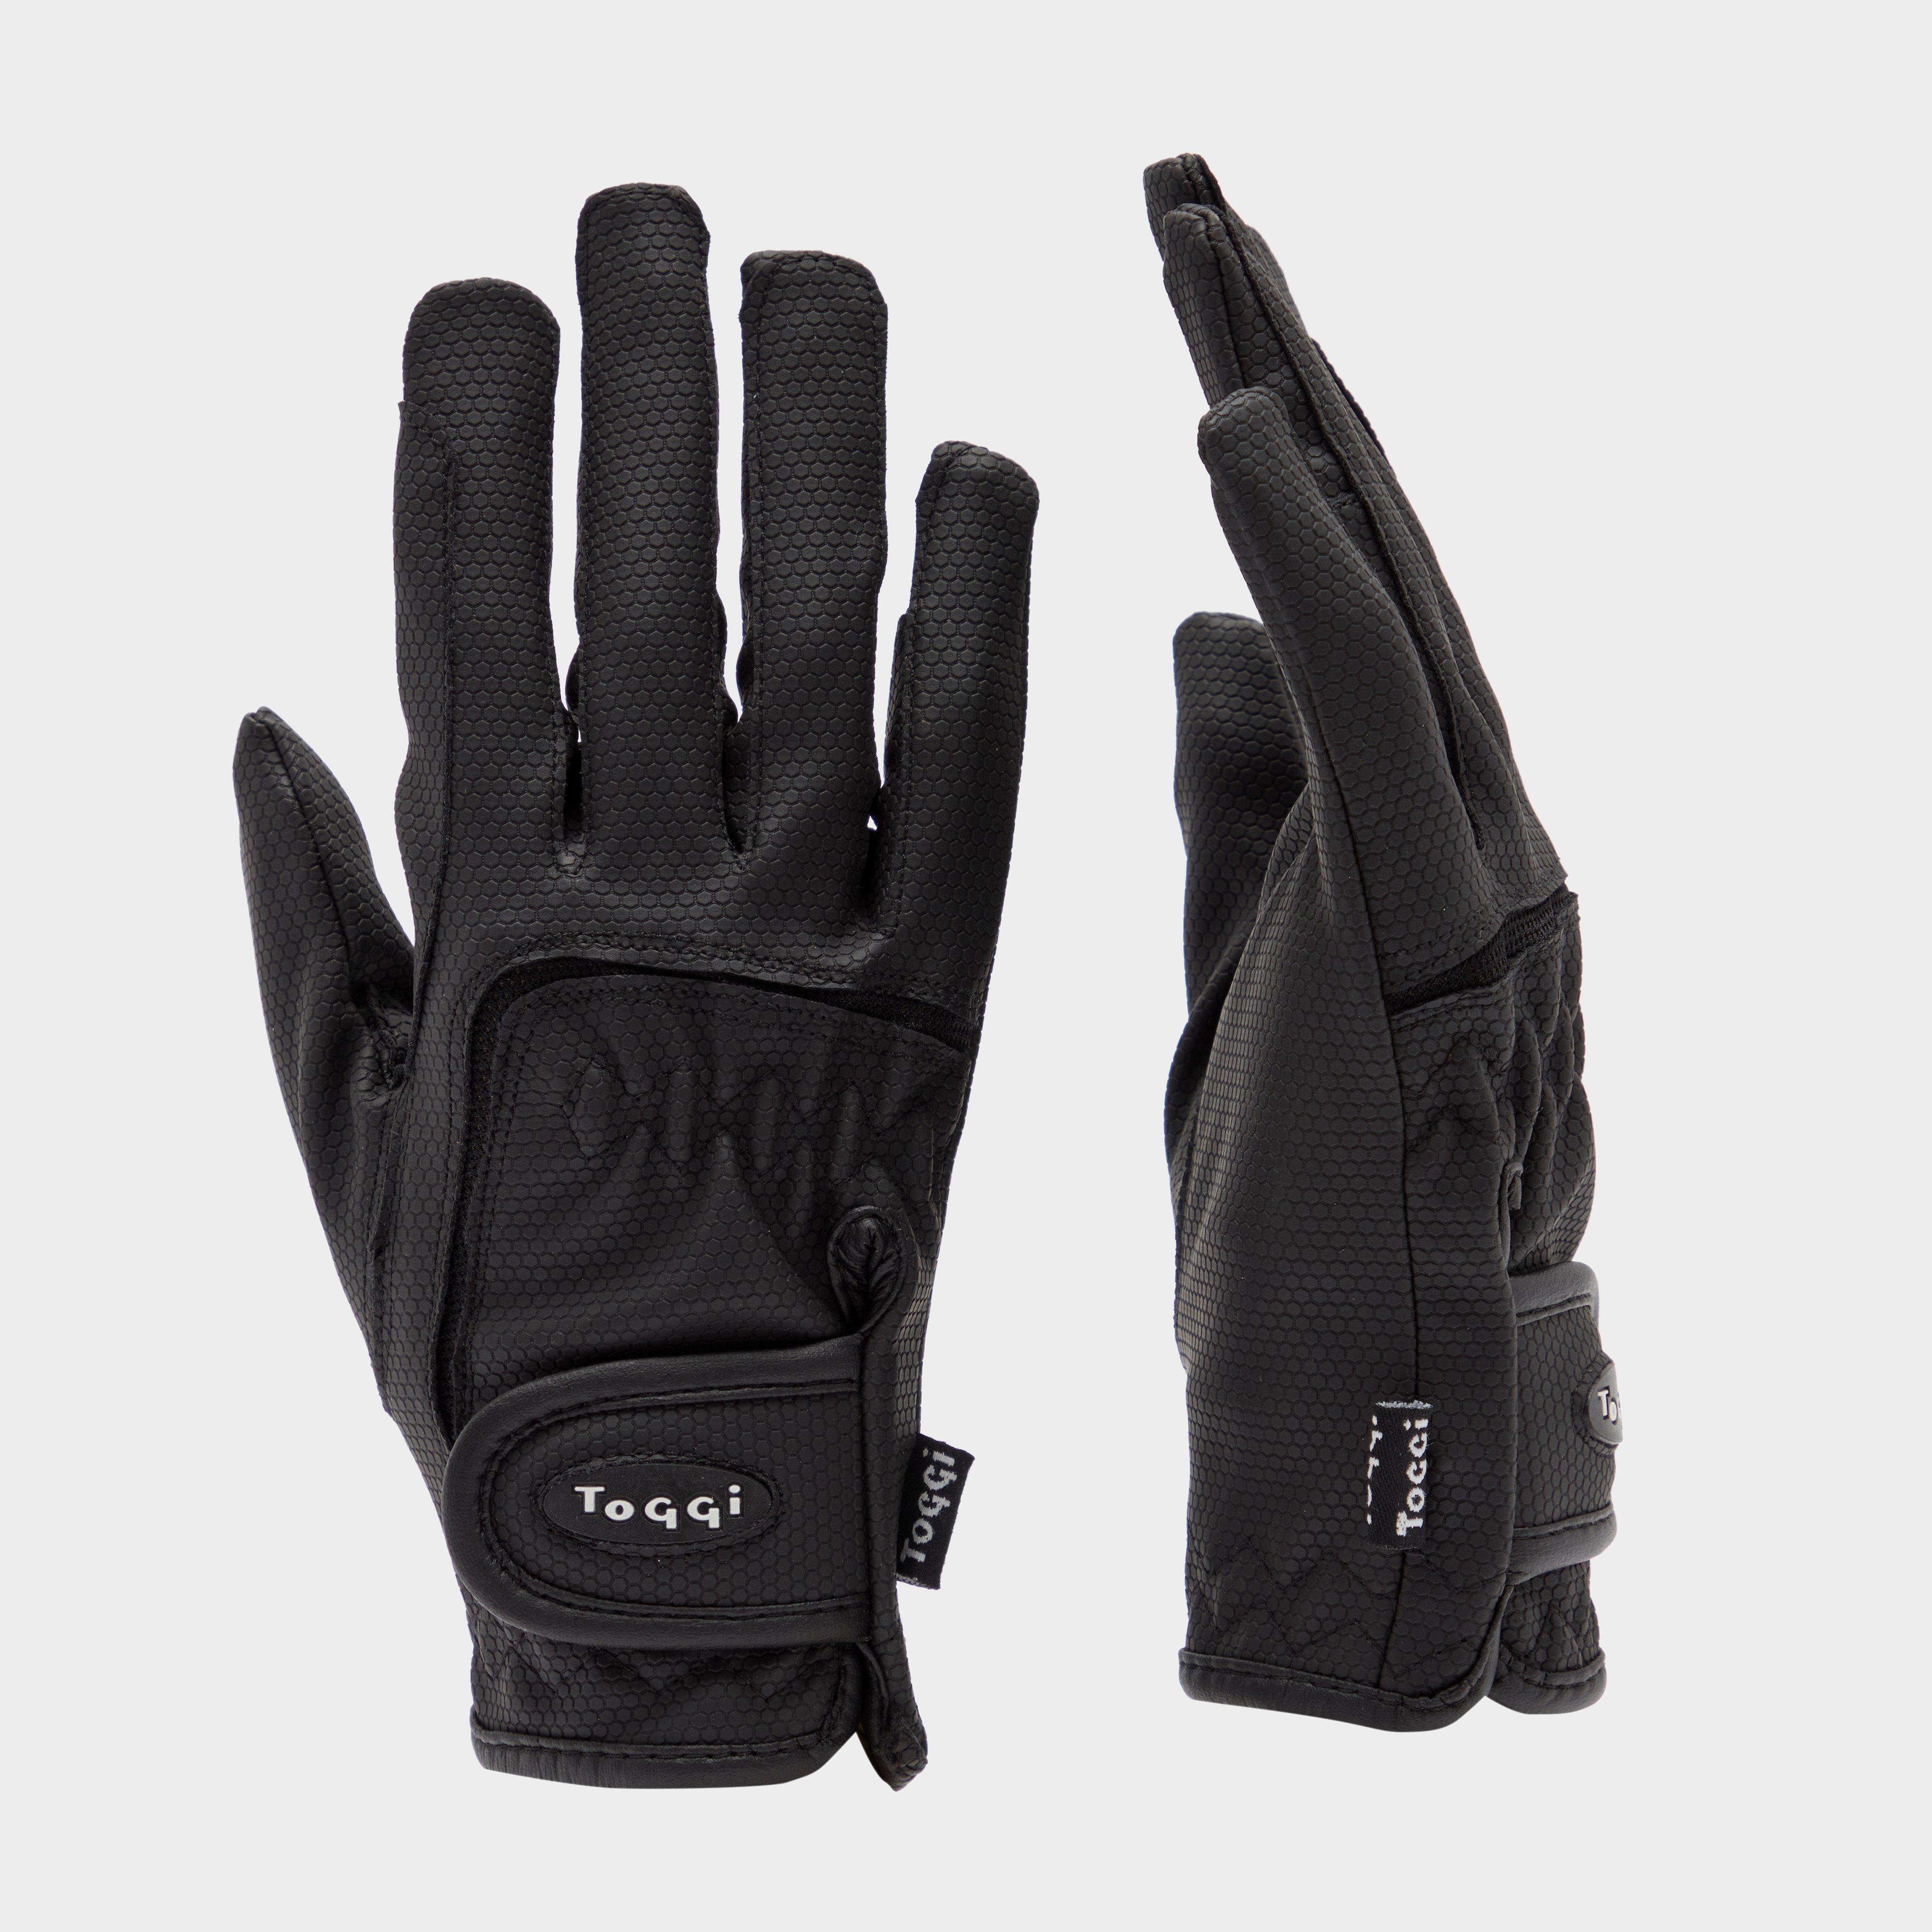 Toggi Hexham Performance Horse Riding Glove - Black/glove  Black/glove